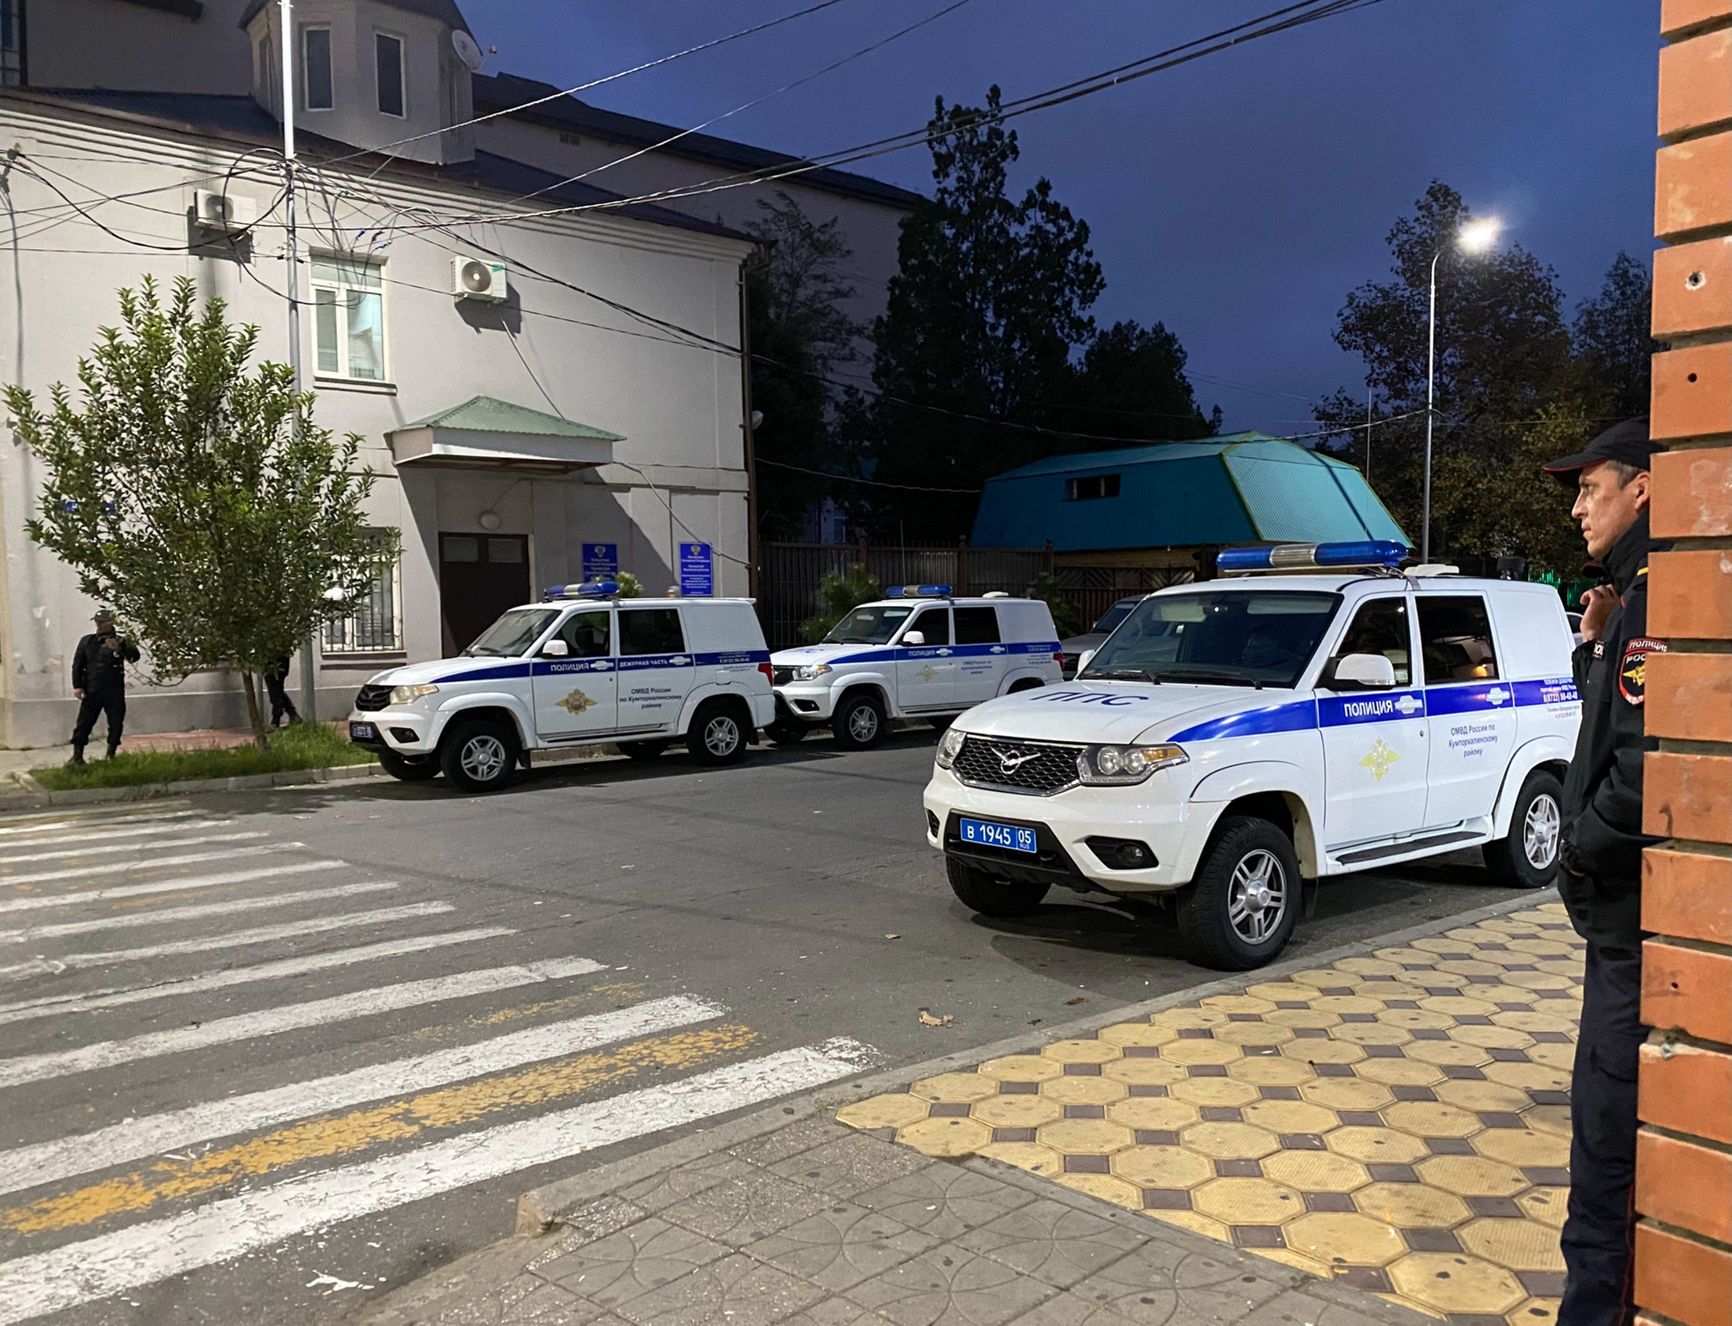 Police officers stop and inspect cars on Magomed Yaragsky Street on November 5